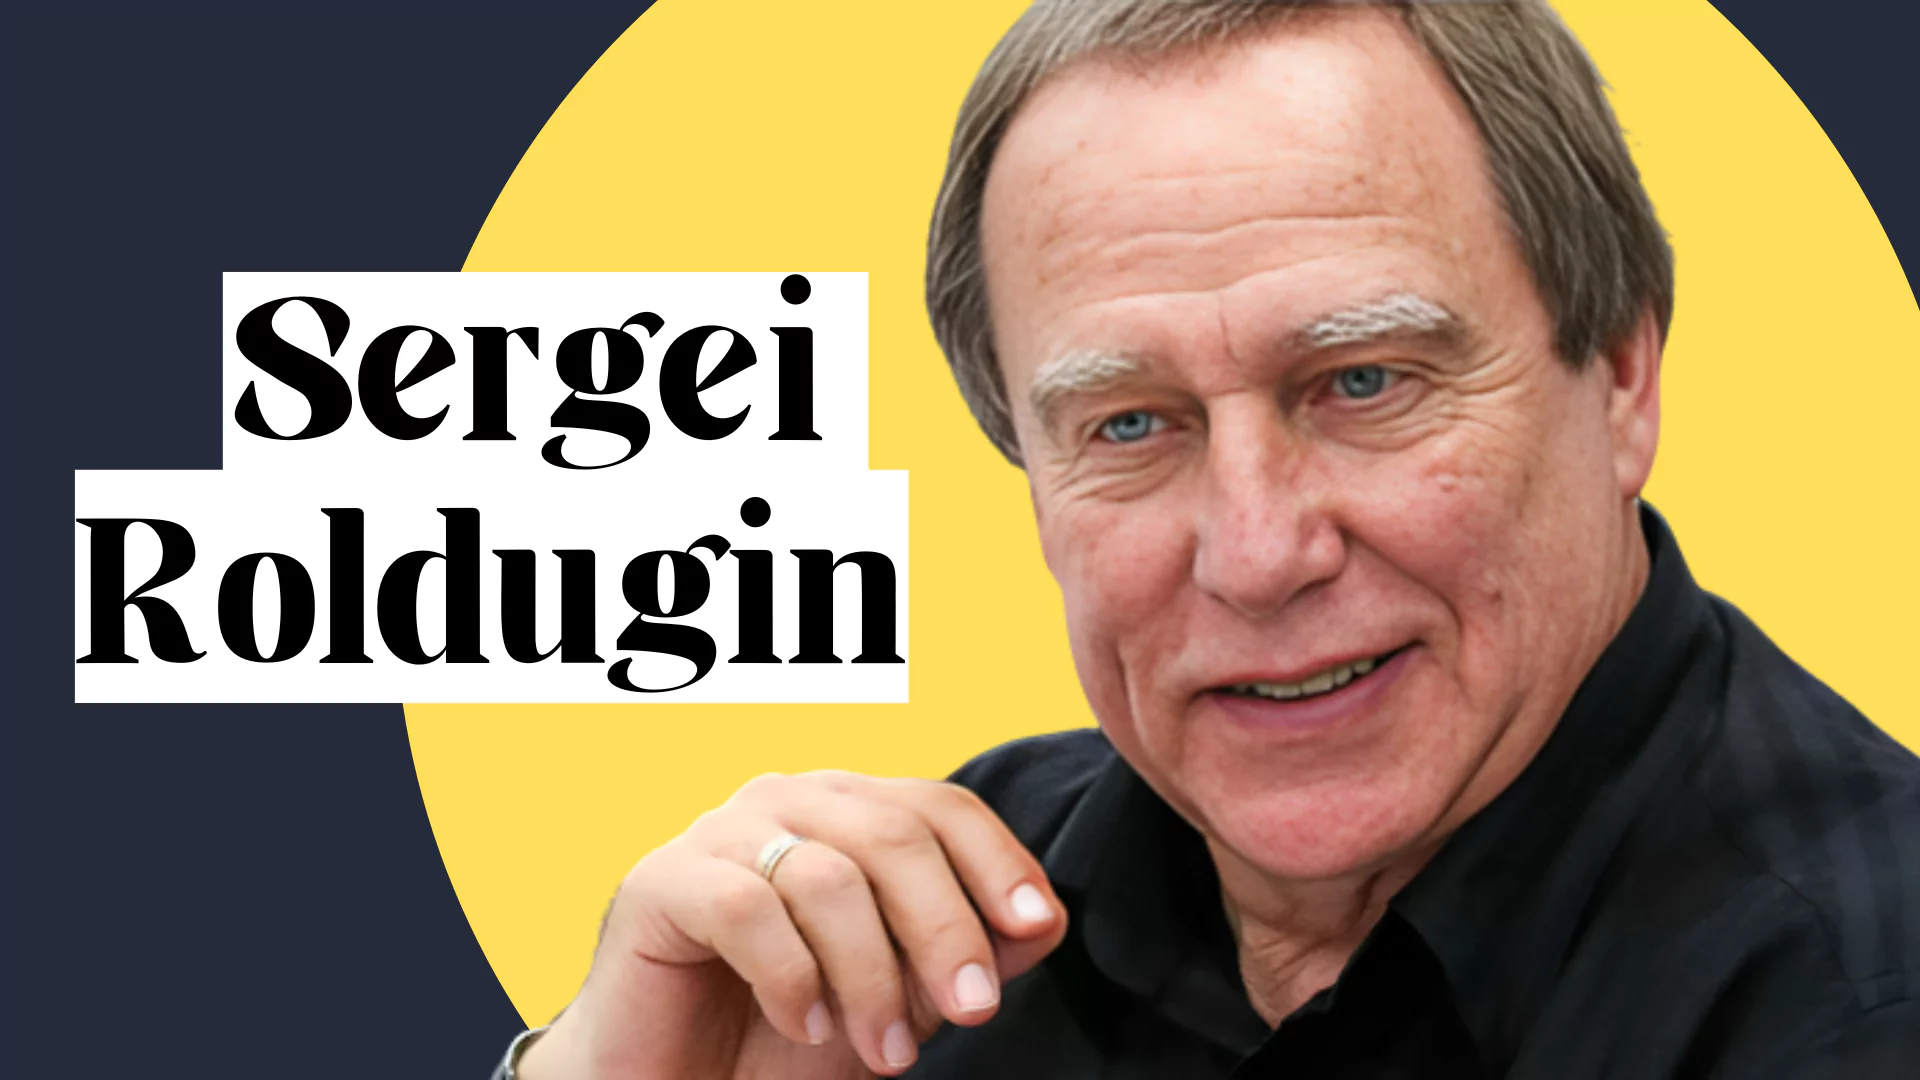 Sergei Roldugin: Controversial Life of Russian Cellist and Putin's Close Friend